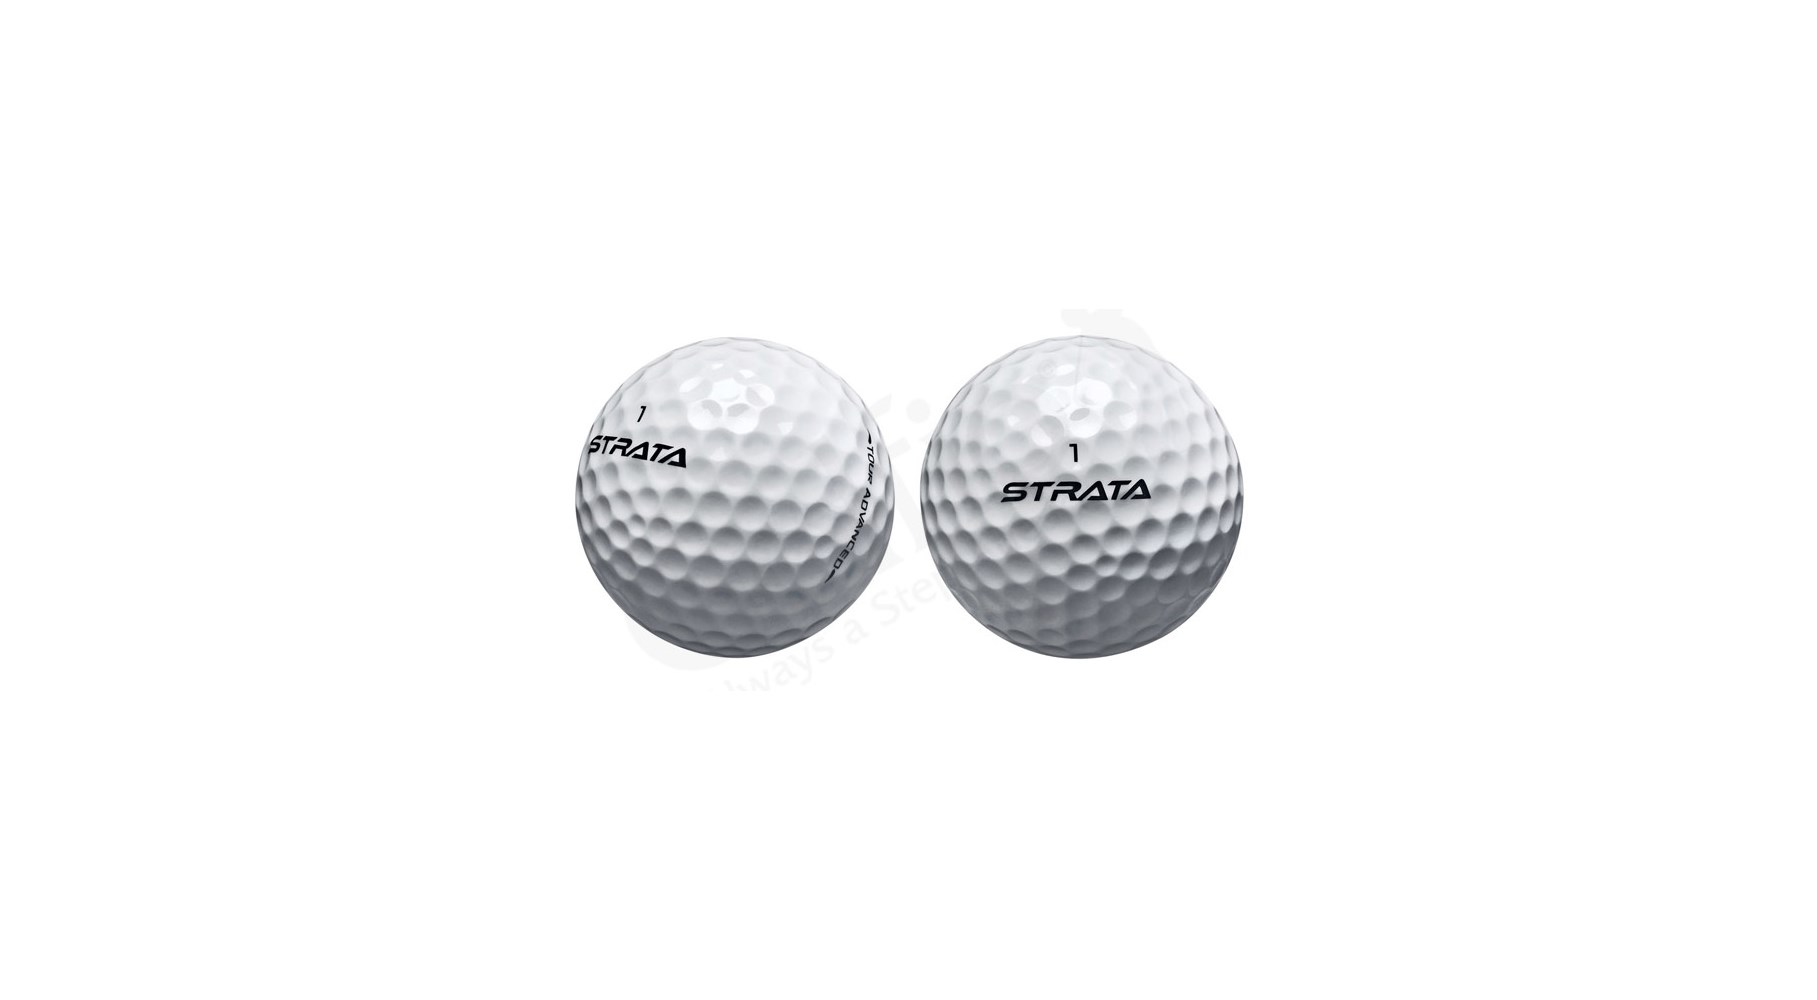 strata tour professional golf balls